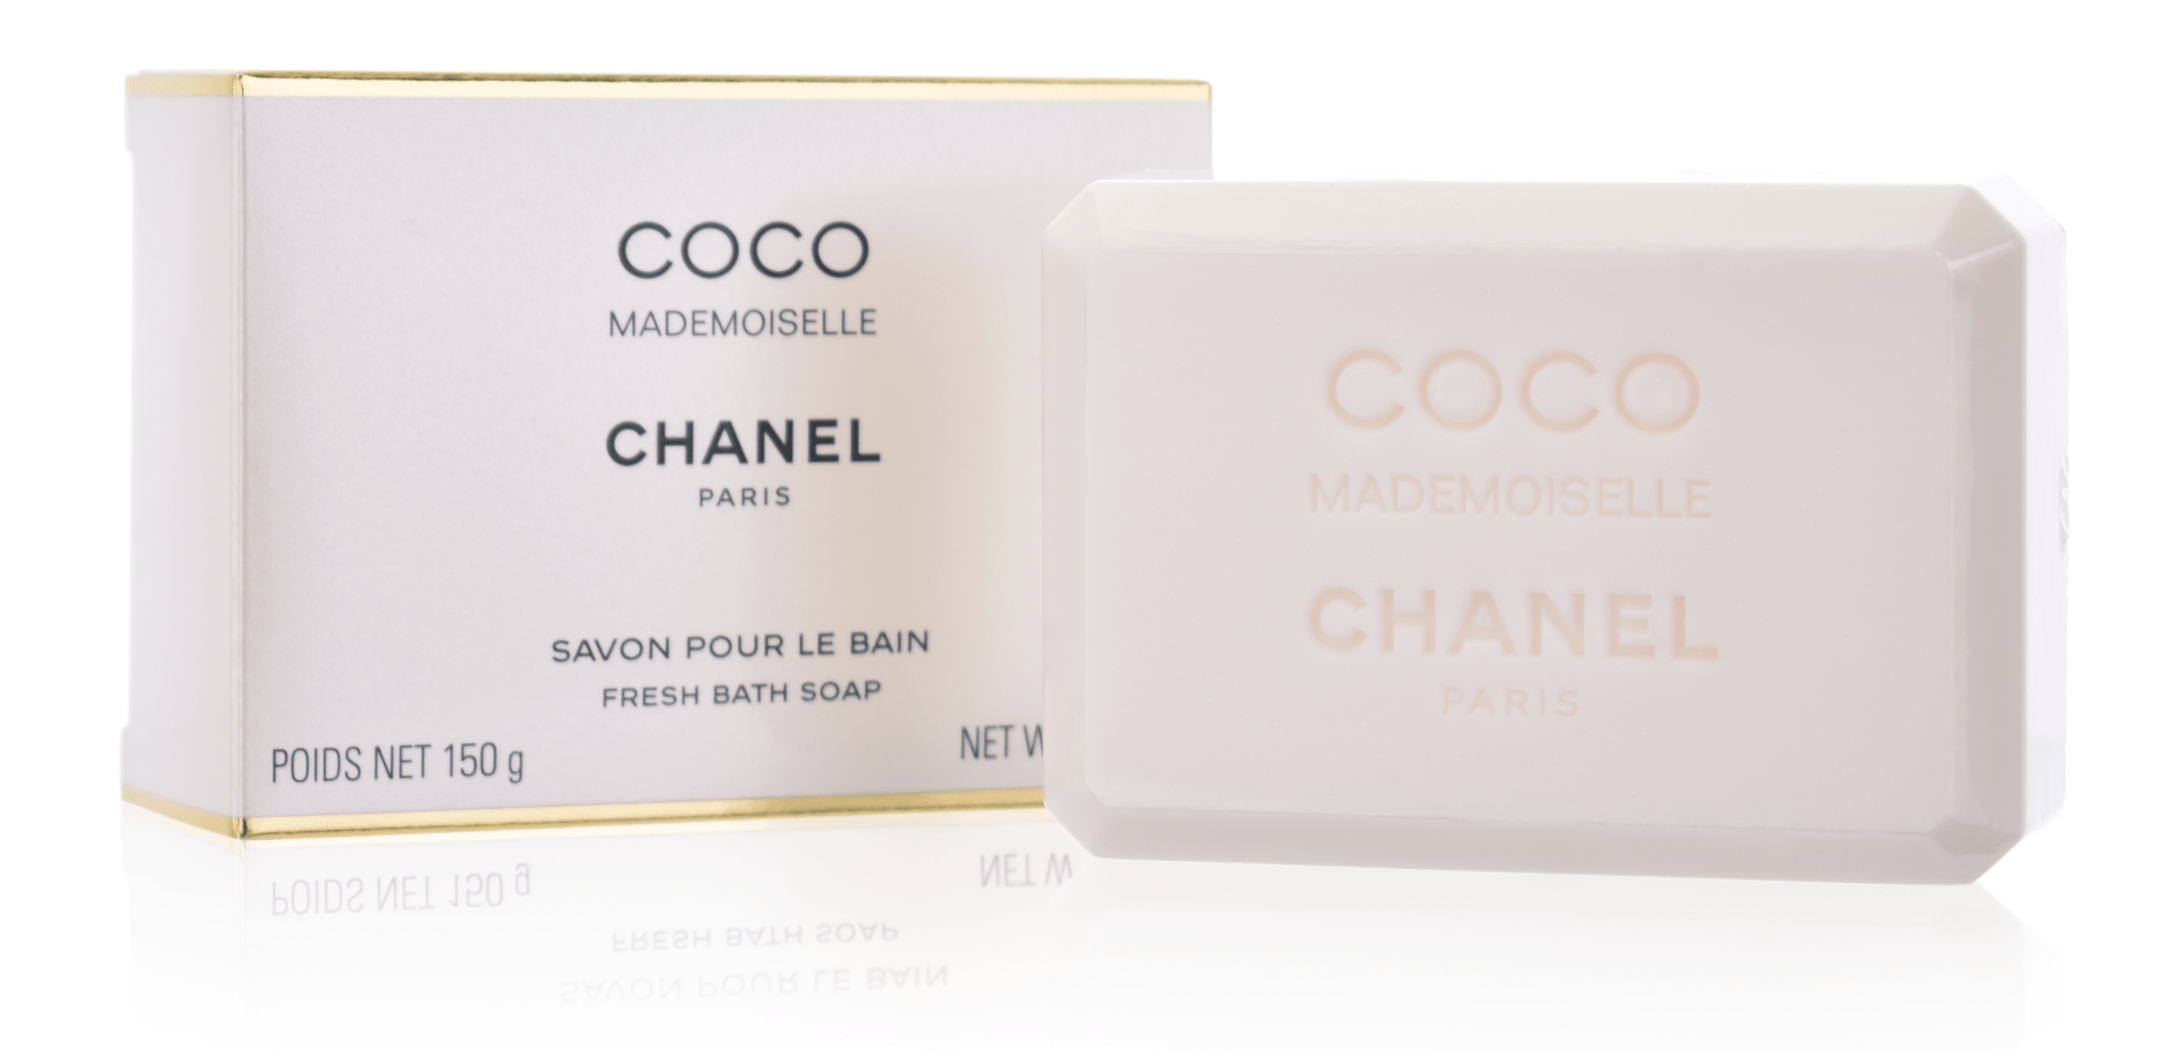 Chanel Coco Mademoiselle 5 ml Eau de Toilette Abfüllung